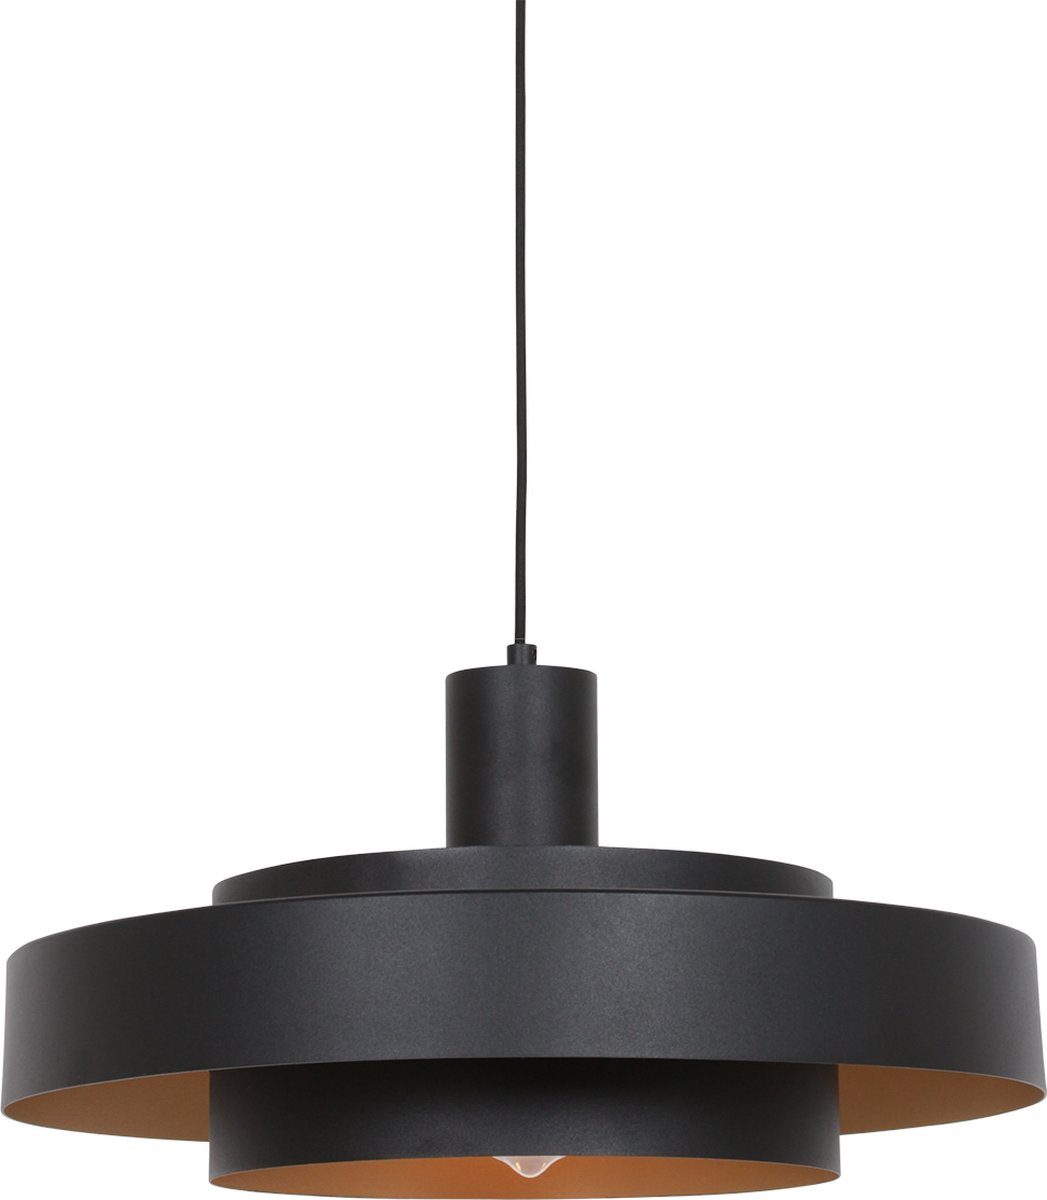 Hanglamp Flinter | 1 lichts | zwart | metaal / glas | Ø 50 cm | in hoogte verstelbaar tot 165 cm | eetkamer / eettafel / woonkamer / slaapkamer lamp | modern design